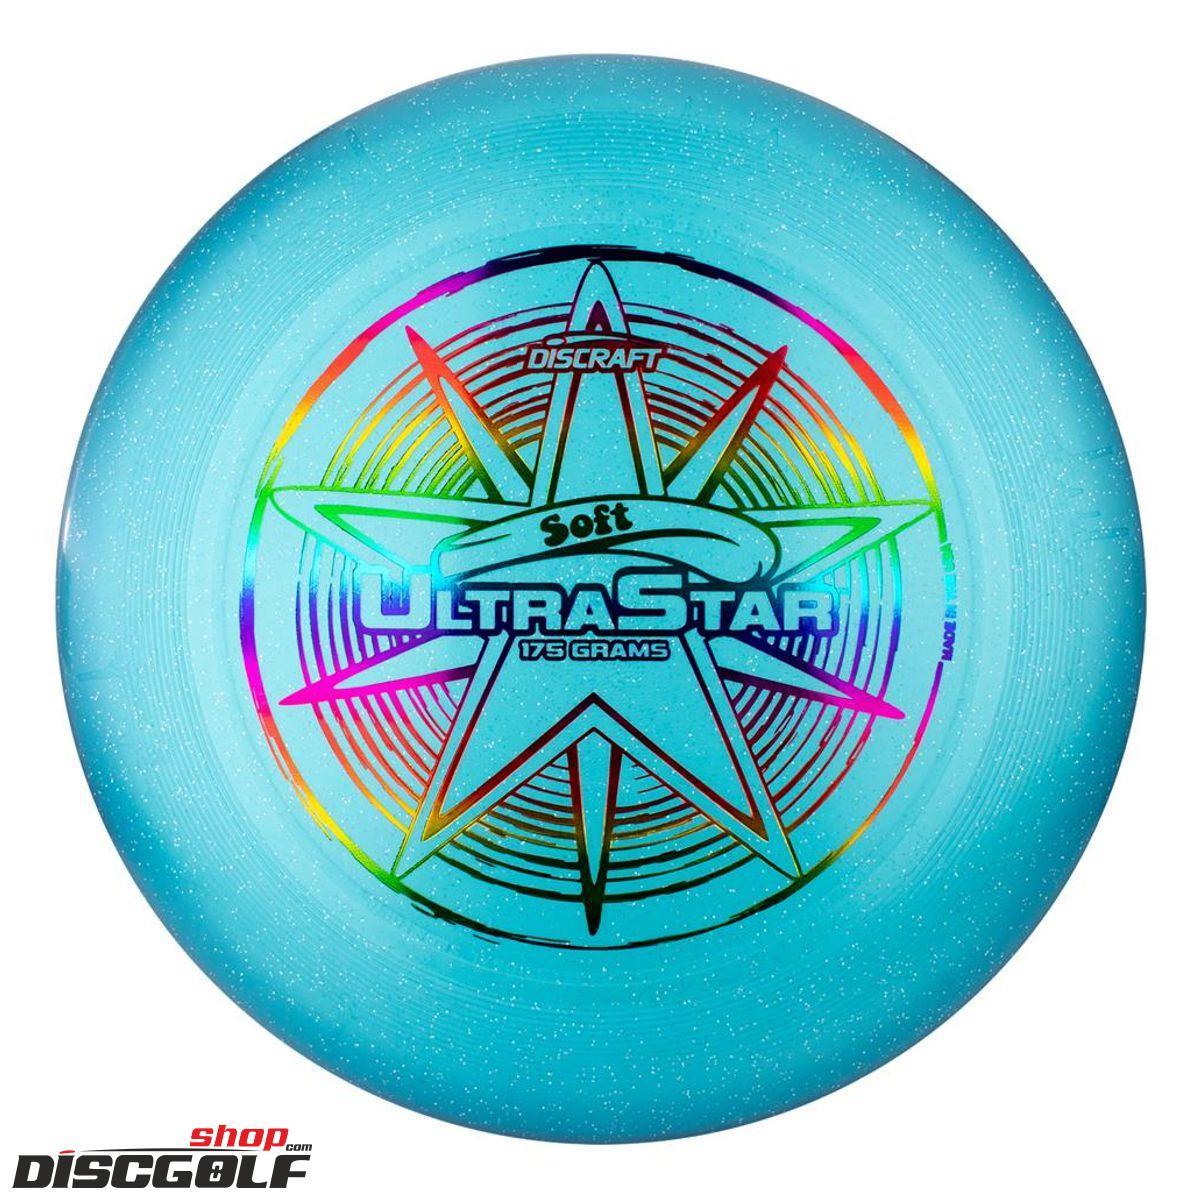 Discraft UltraStar Soft Modrá/Blue (discgolf)